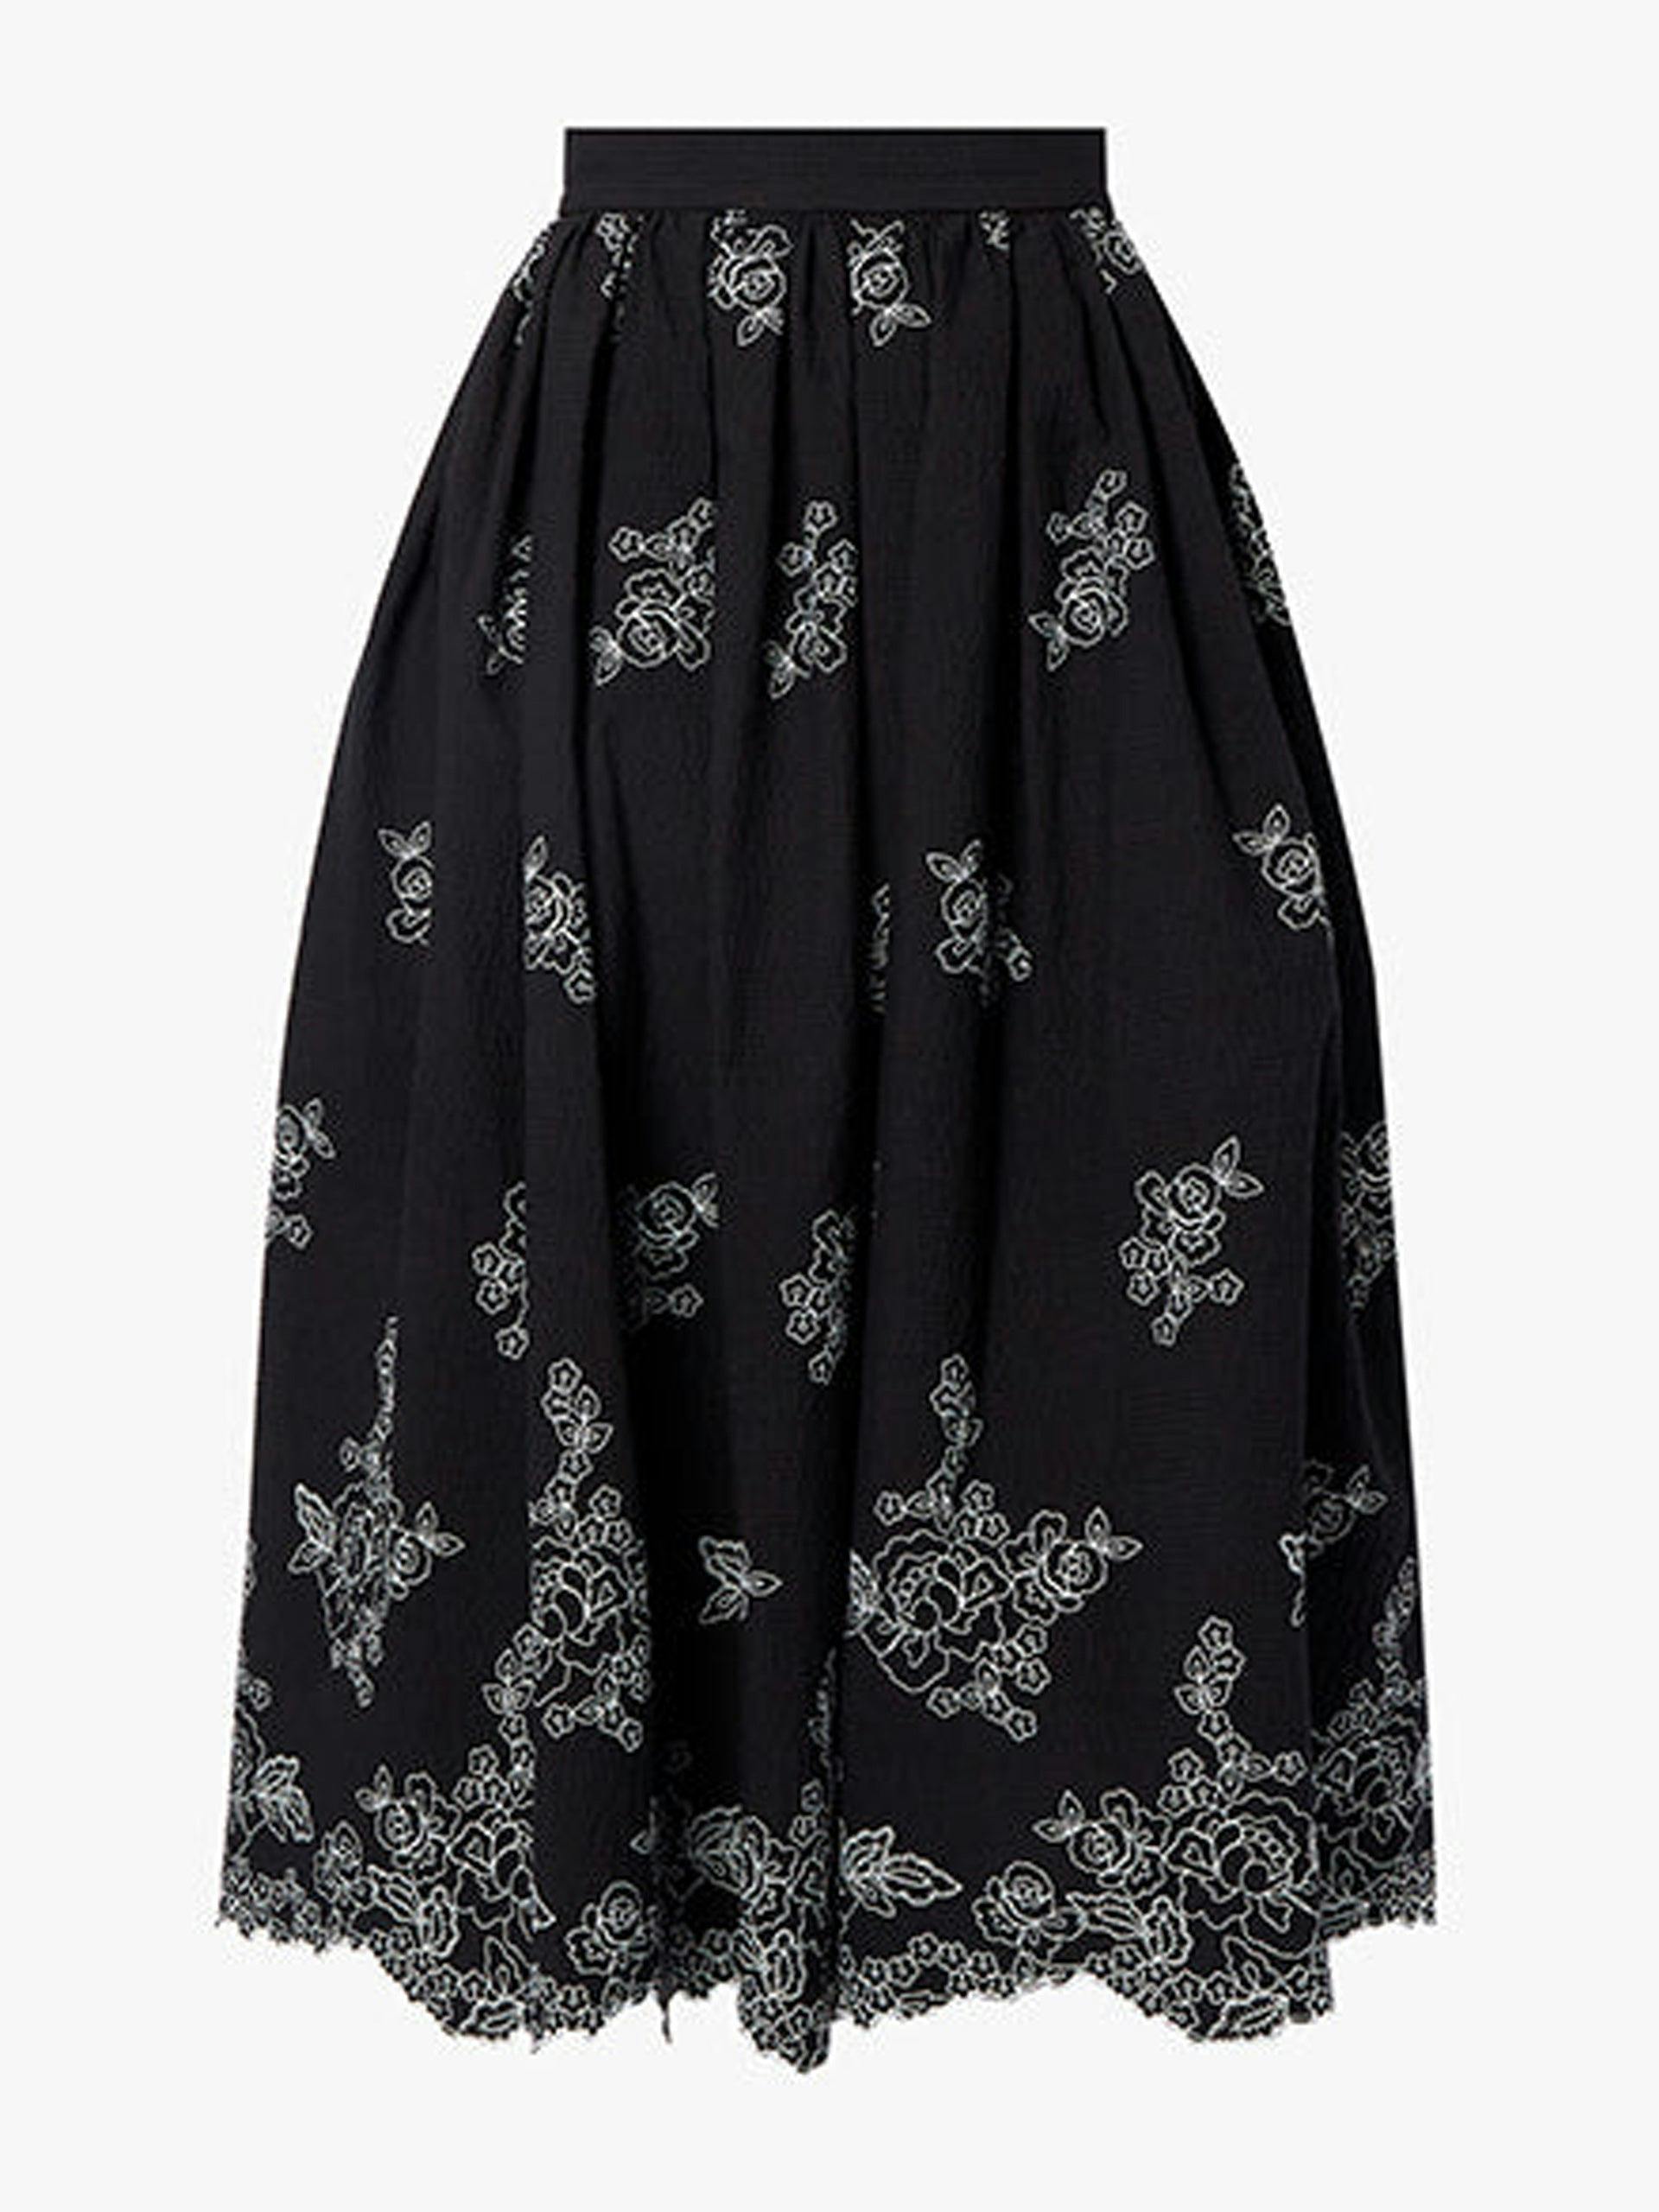 Fiona floral embroidered black seersucker skirt